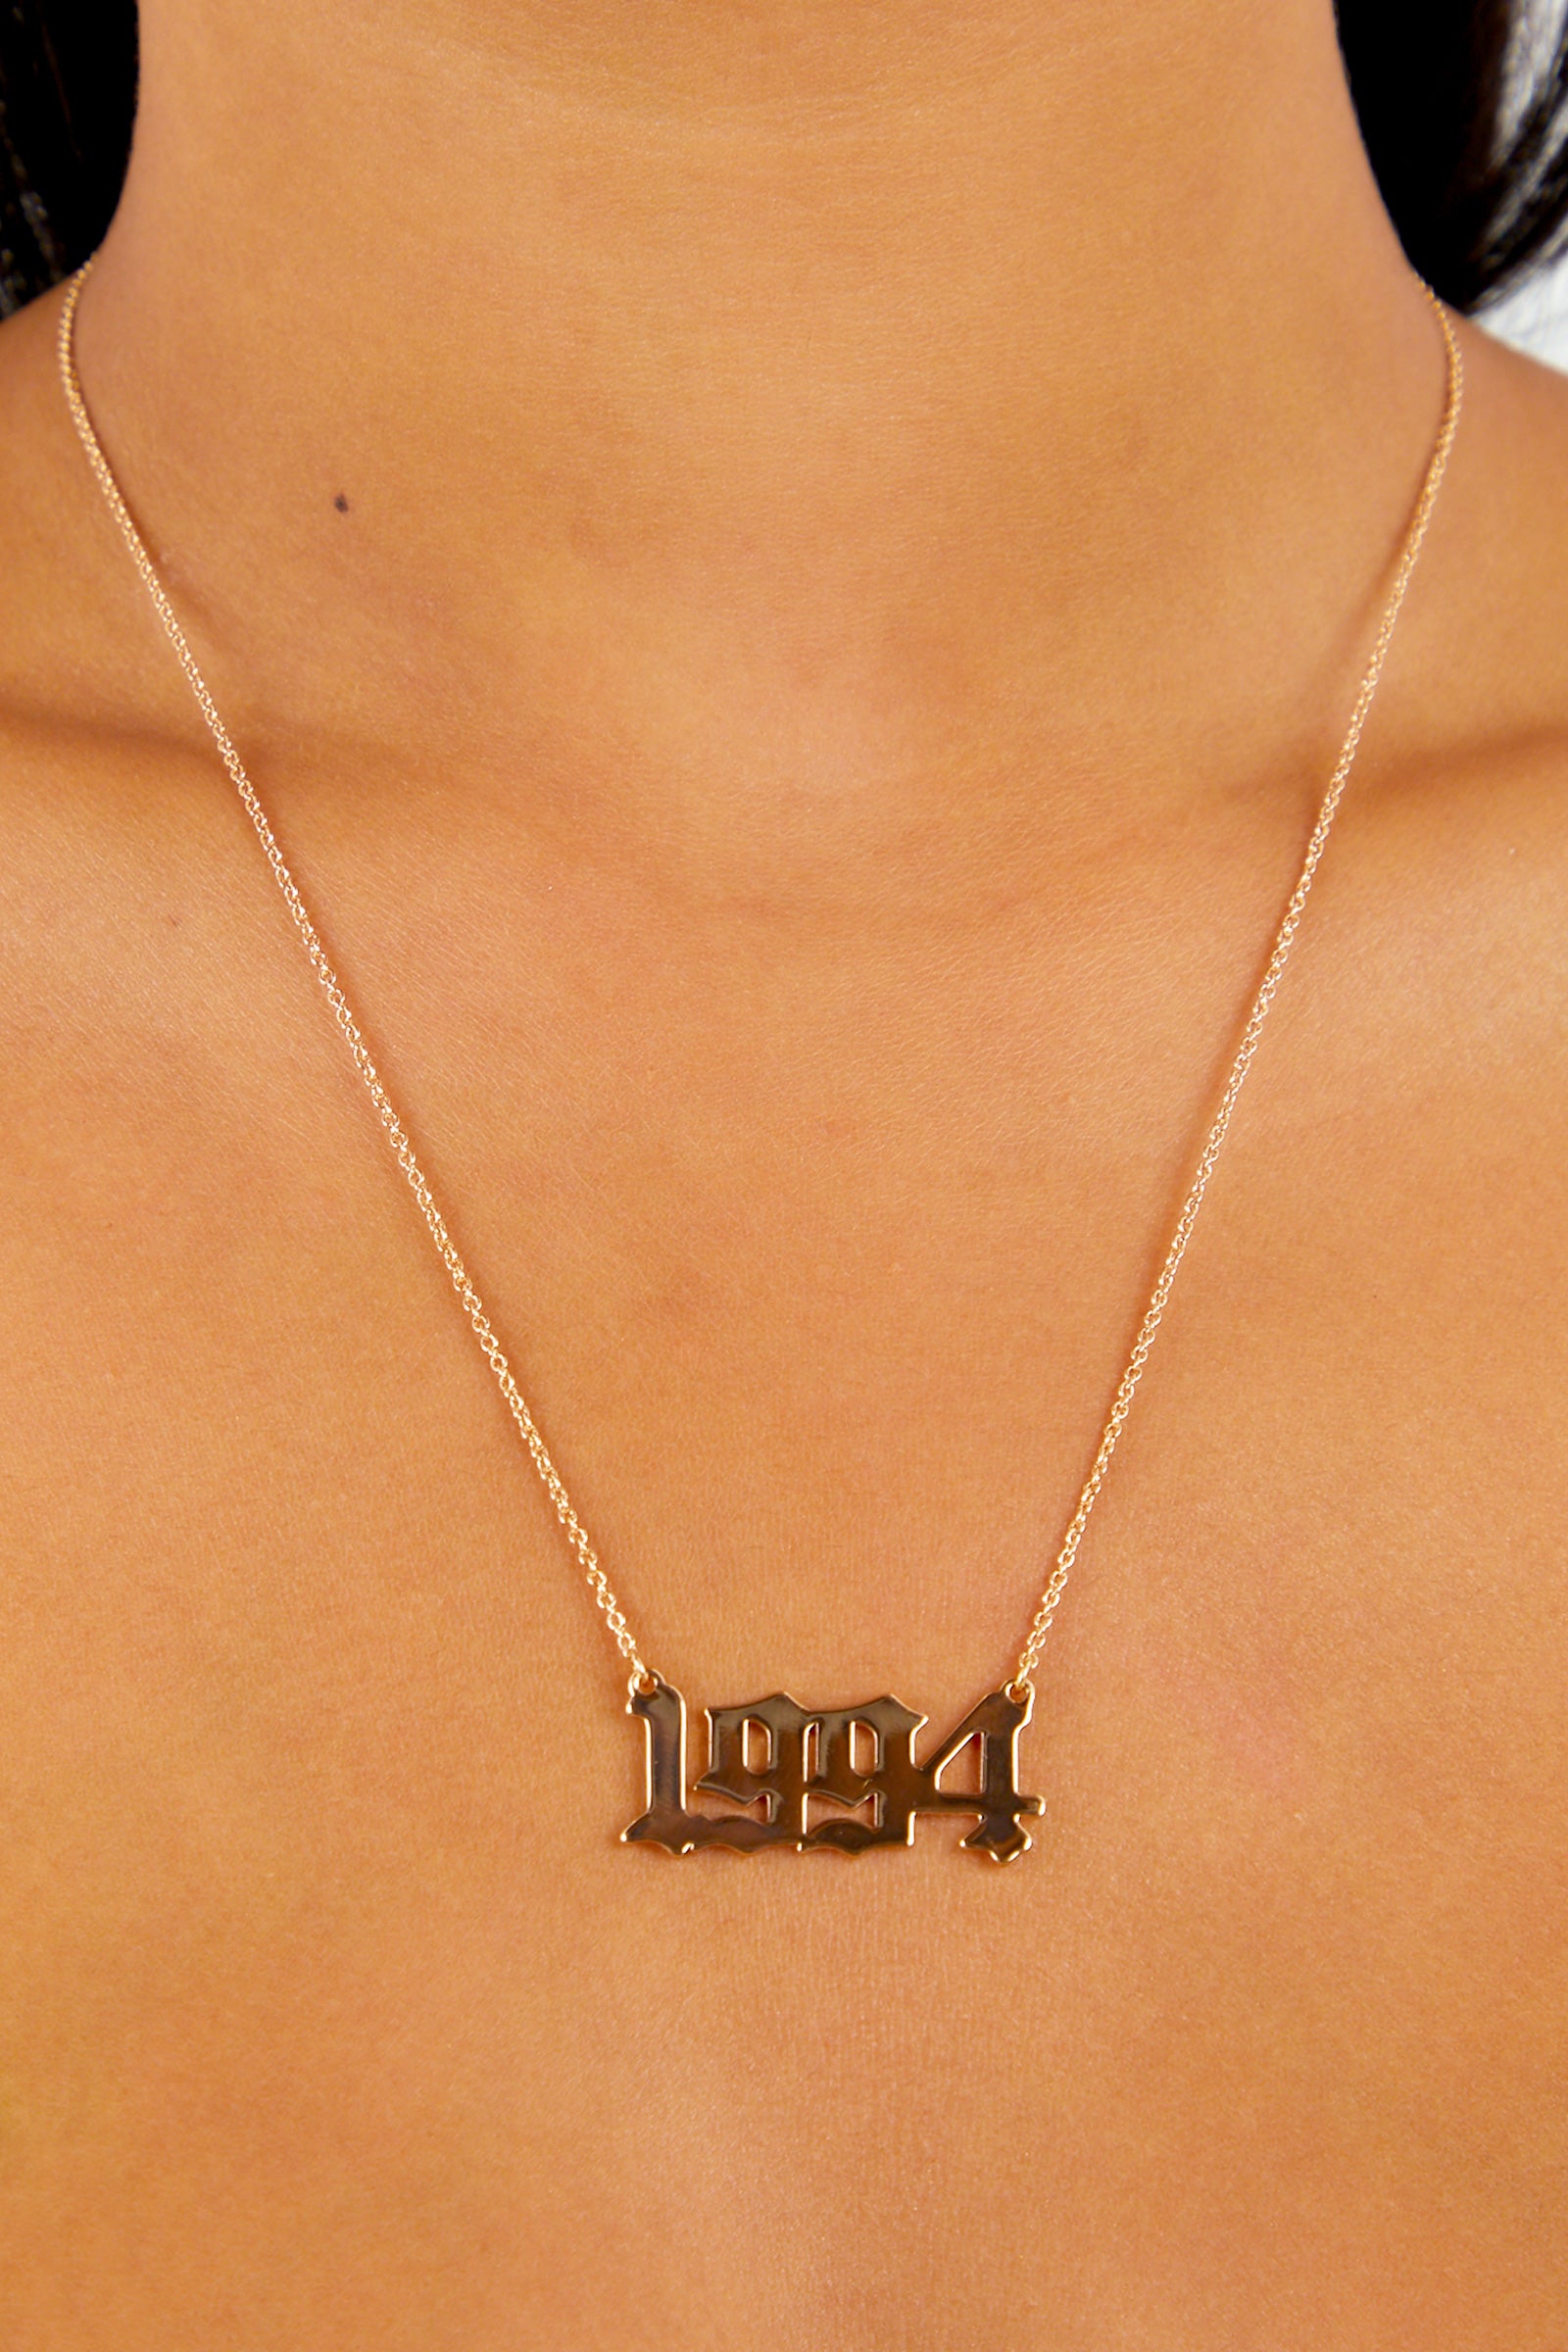 94 Pendant Necklace - Gold